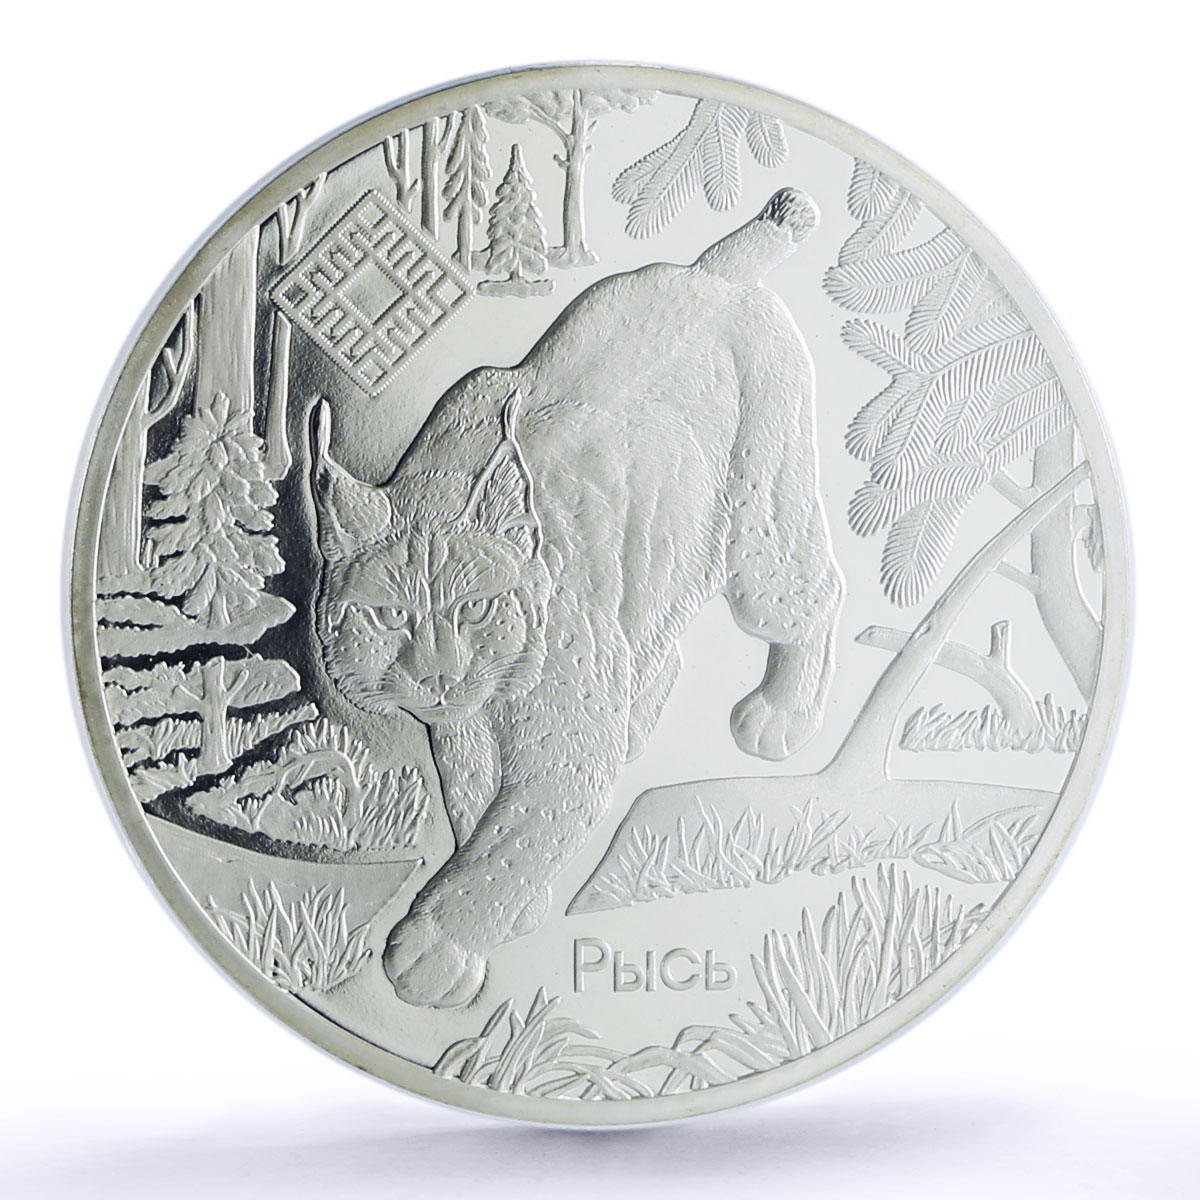 Belarus 20 rubles Preserve Sinsha Lynx Wildlife PR70 PCGS proof silver coin 2020